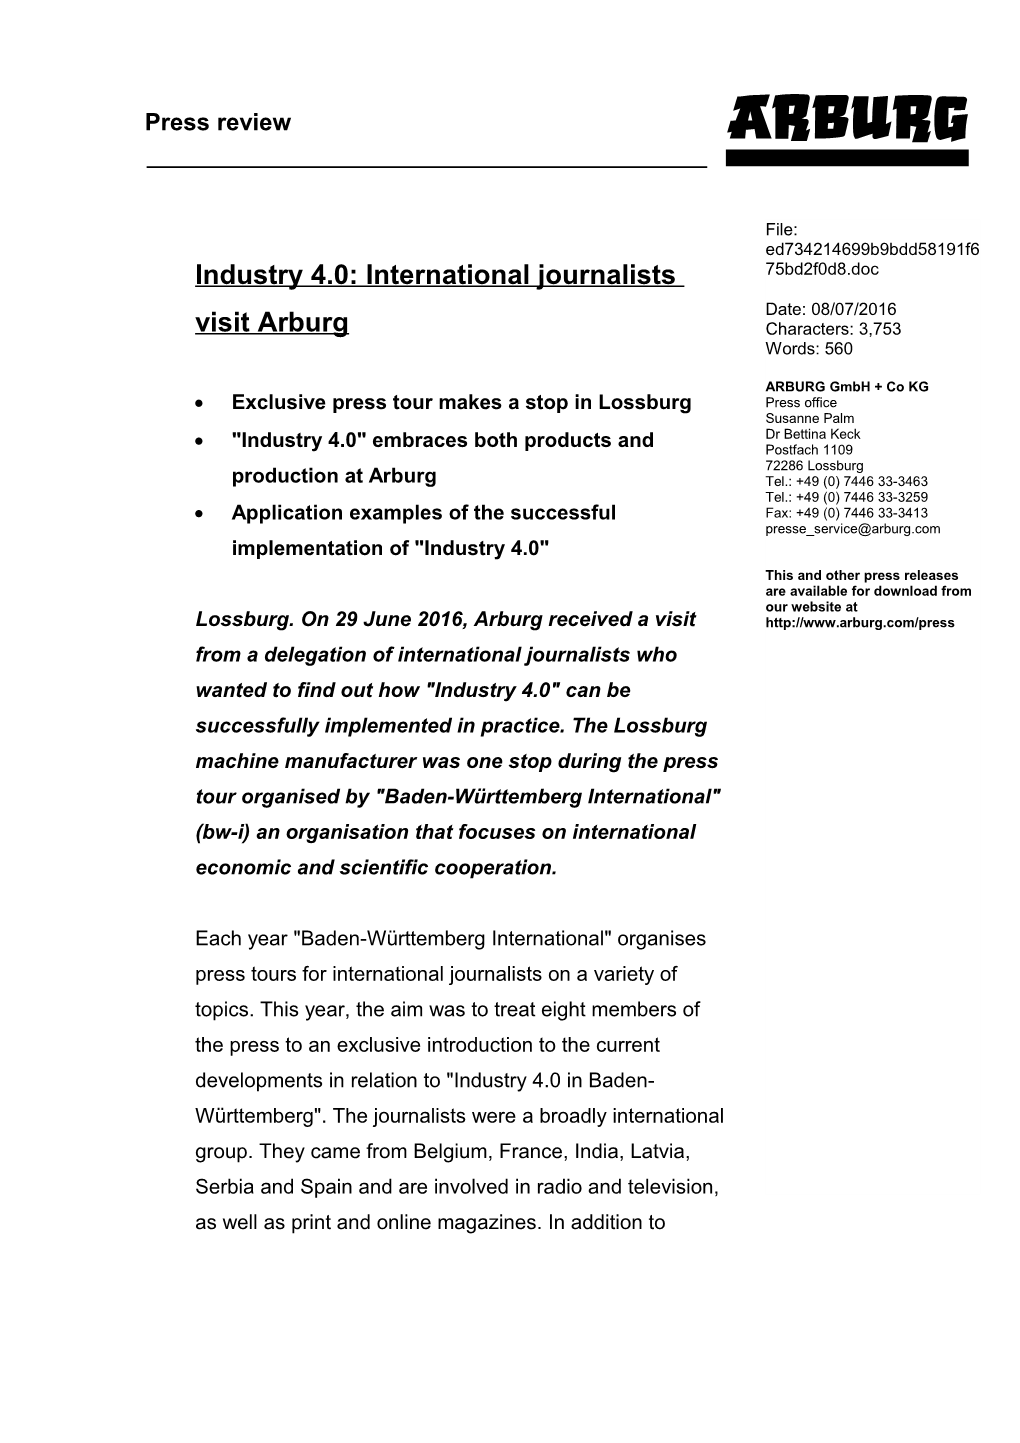 Industry 4.0: International Journalists Visit Arburg